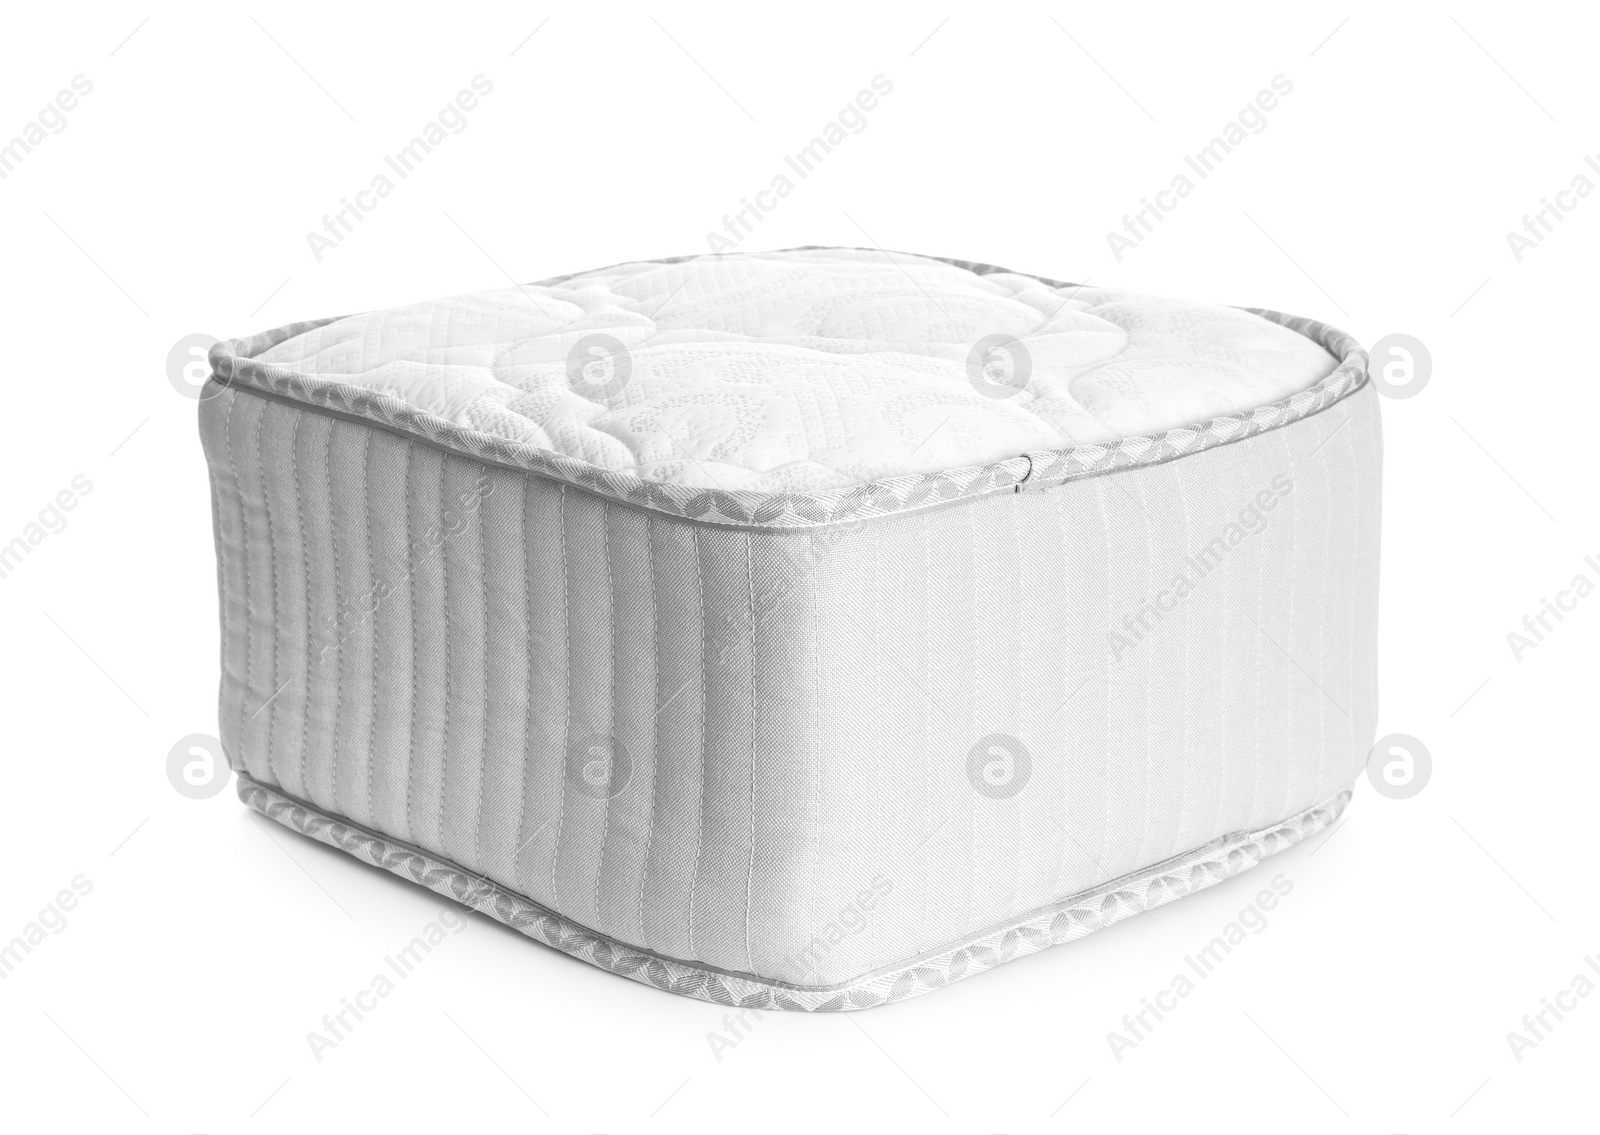 Photo of Sample of modern orthopedic mattress isolated on white